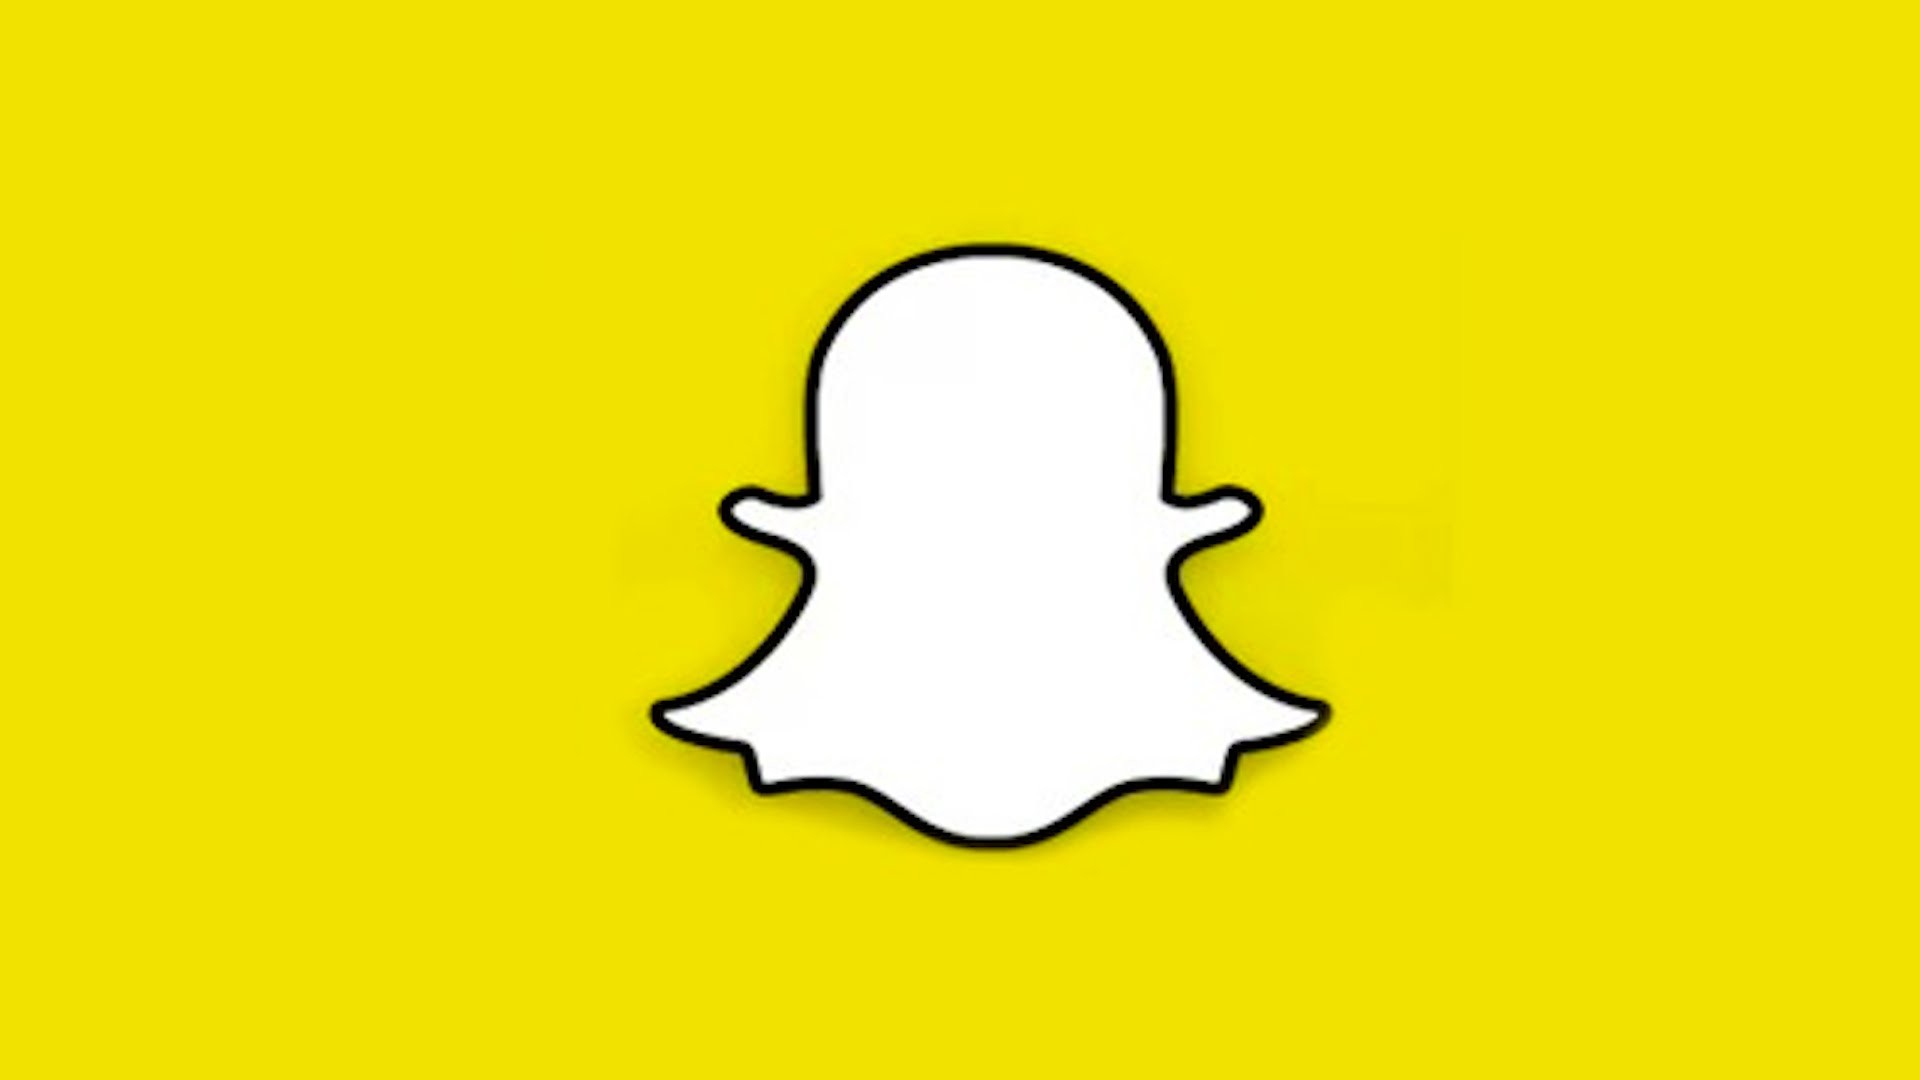 snapchat thumb logo yellow background on snapchat logo wallpapers